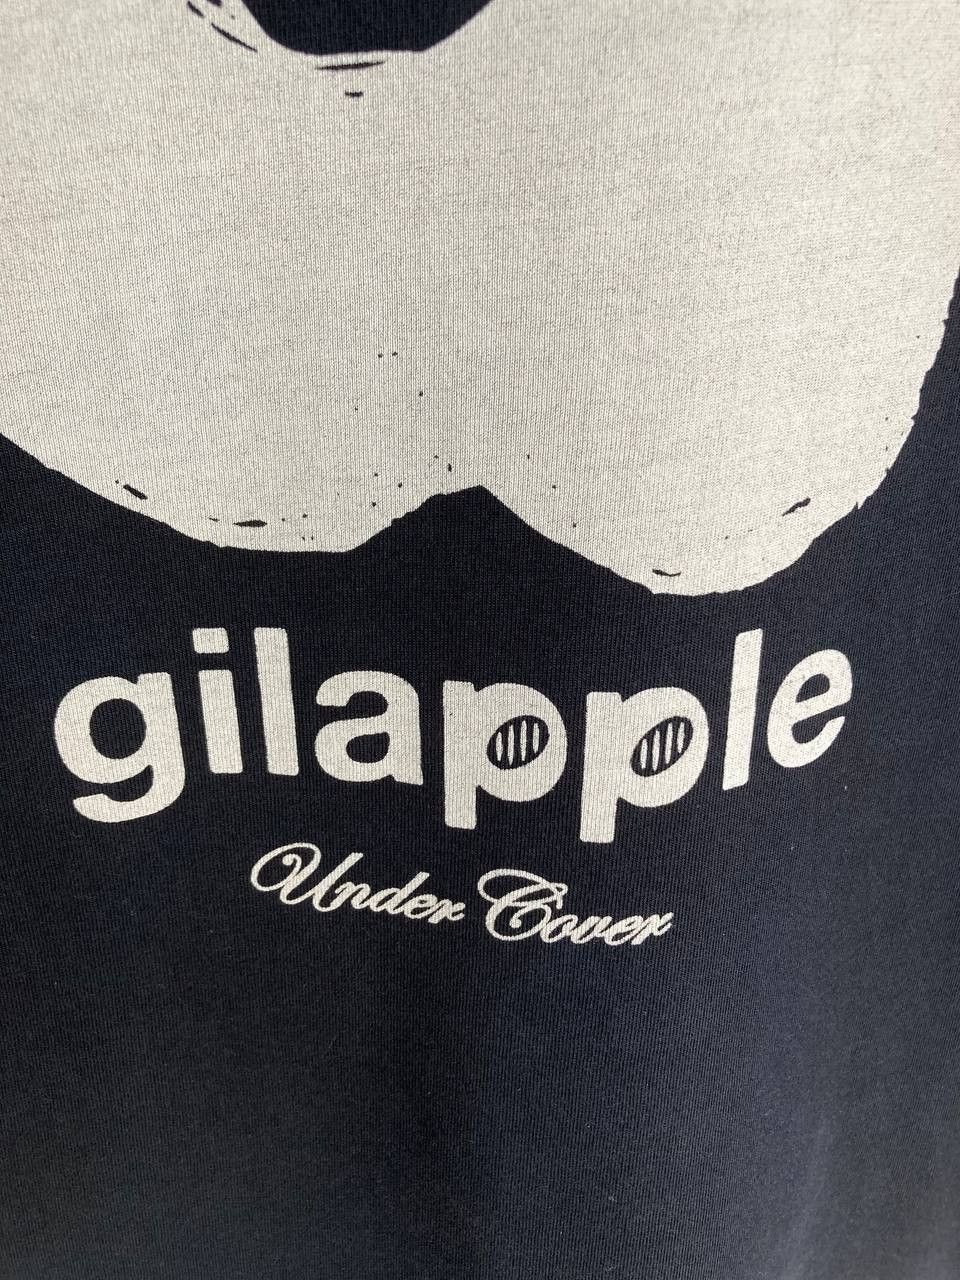 Undercover “Gilapple” Tee - 5